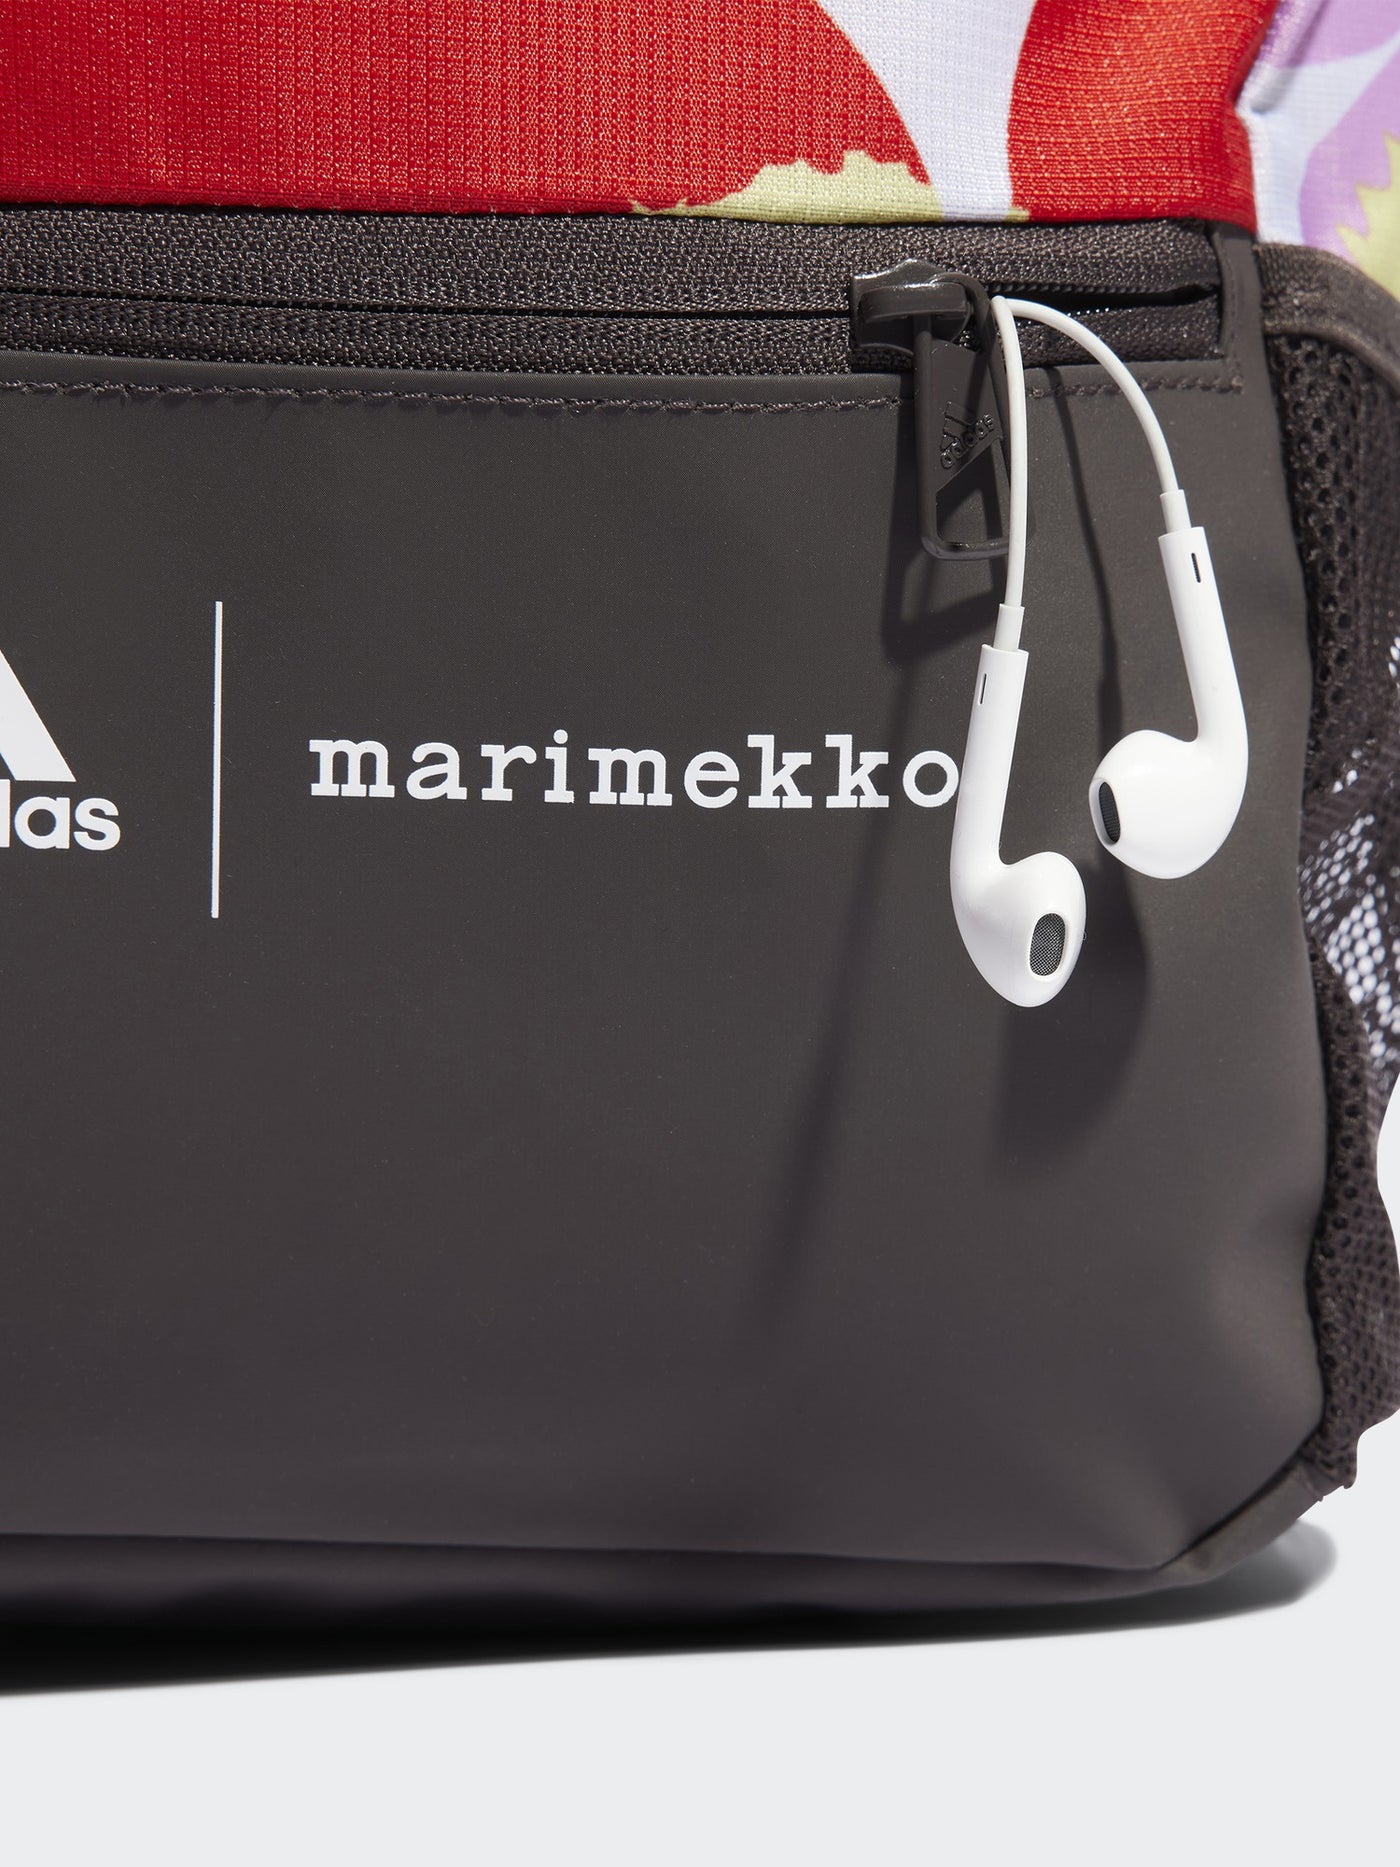 adidas Junior Girls adidas x Marimekko Backpack